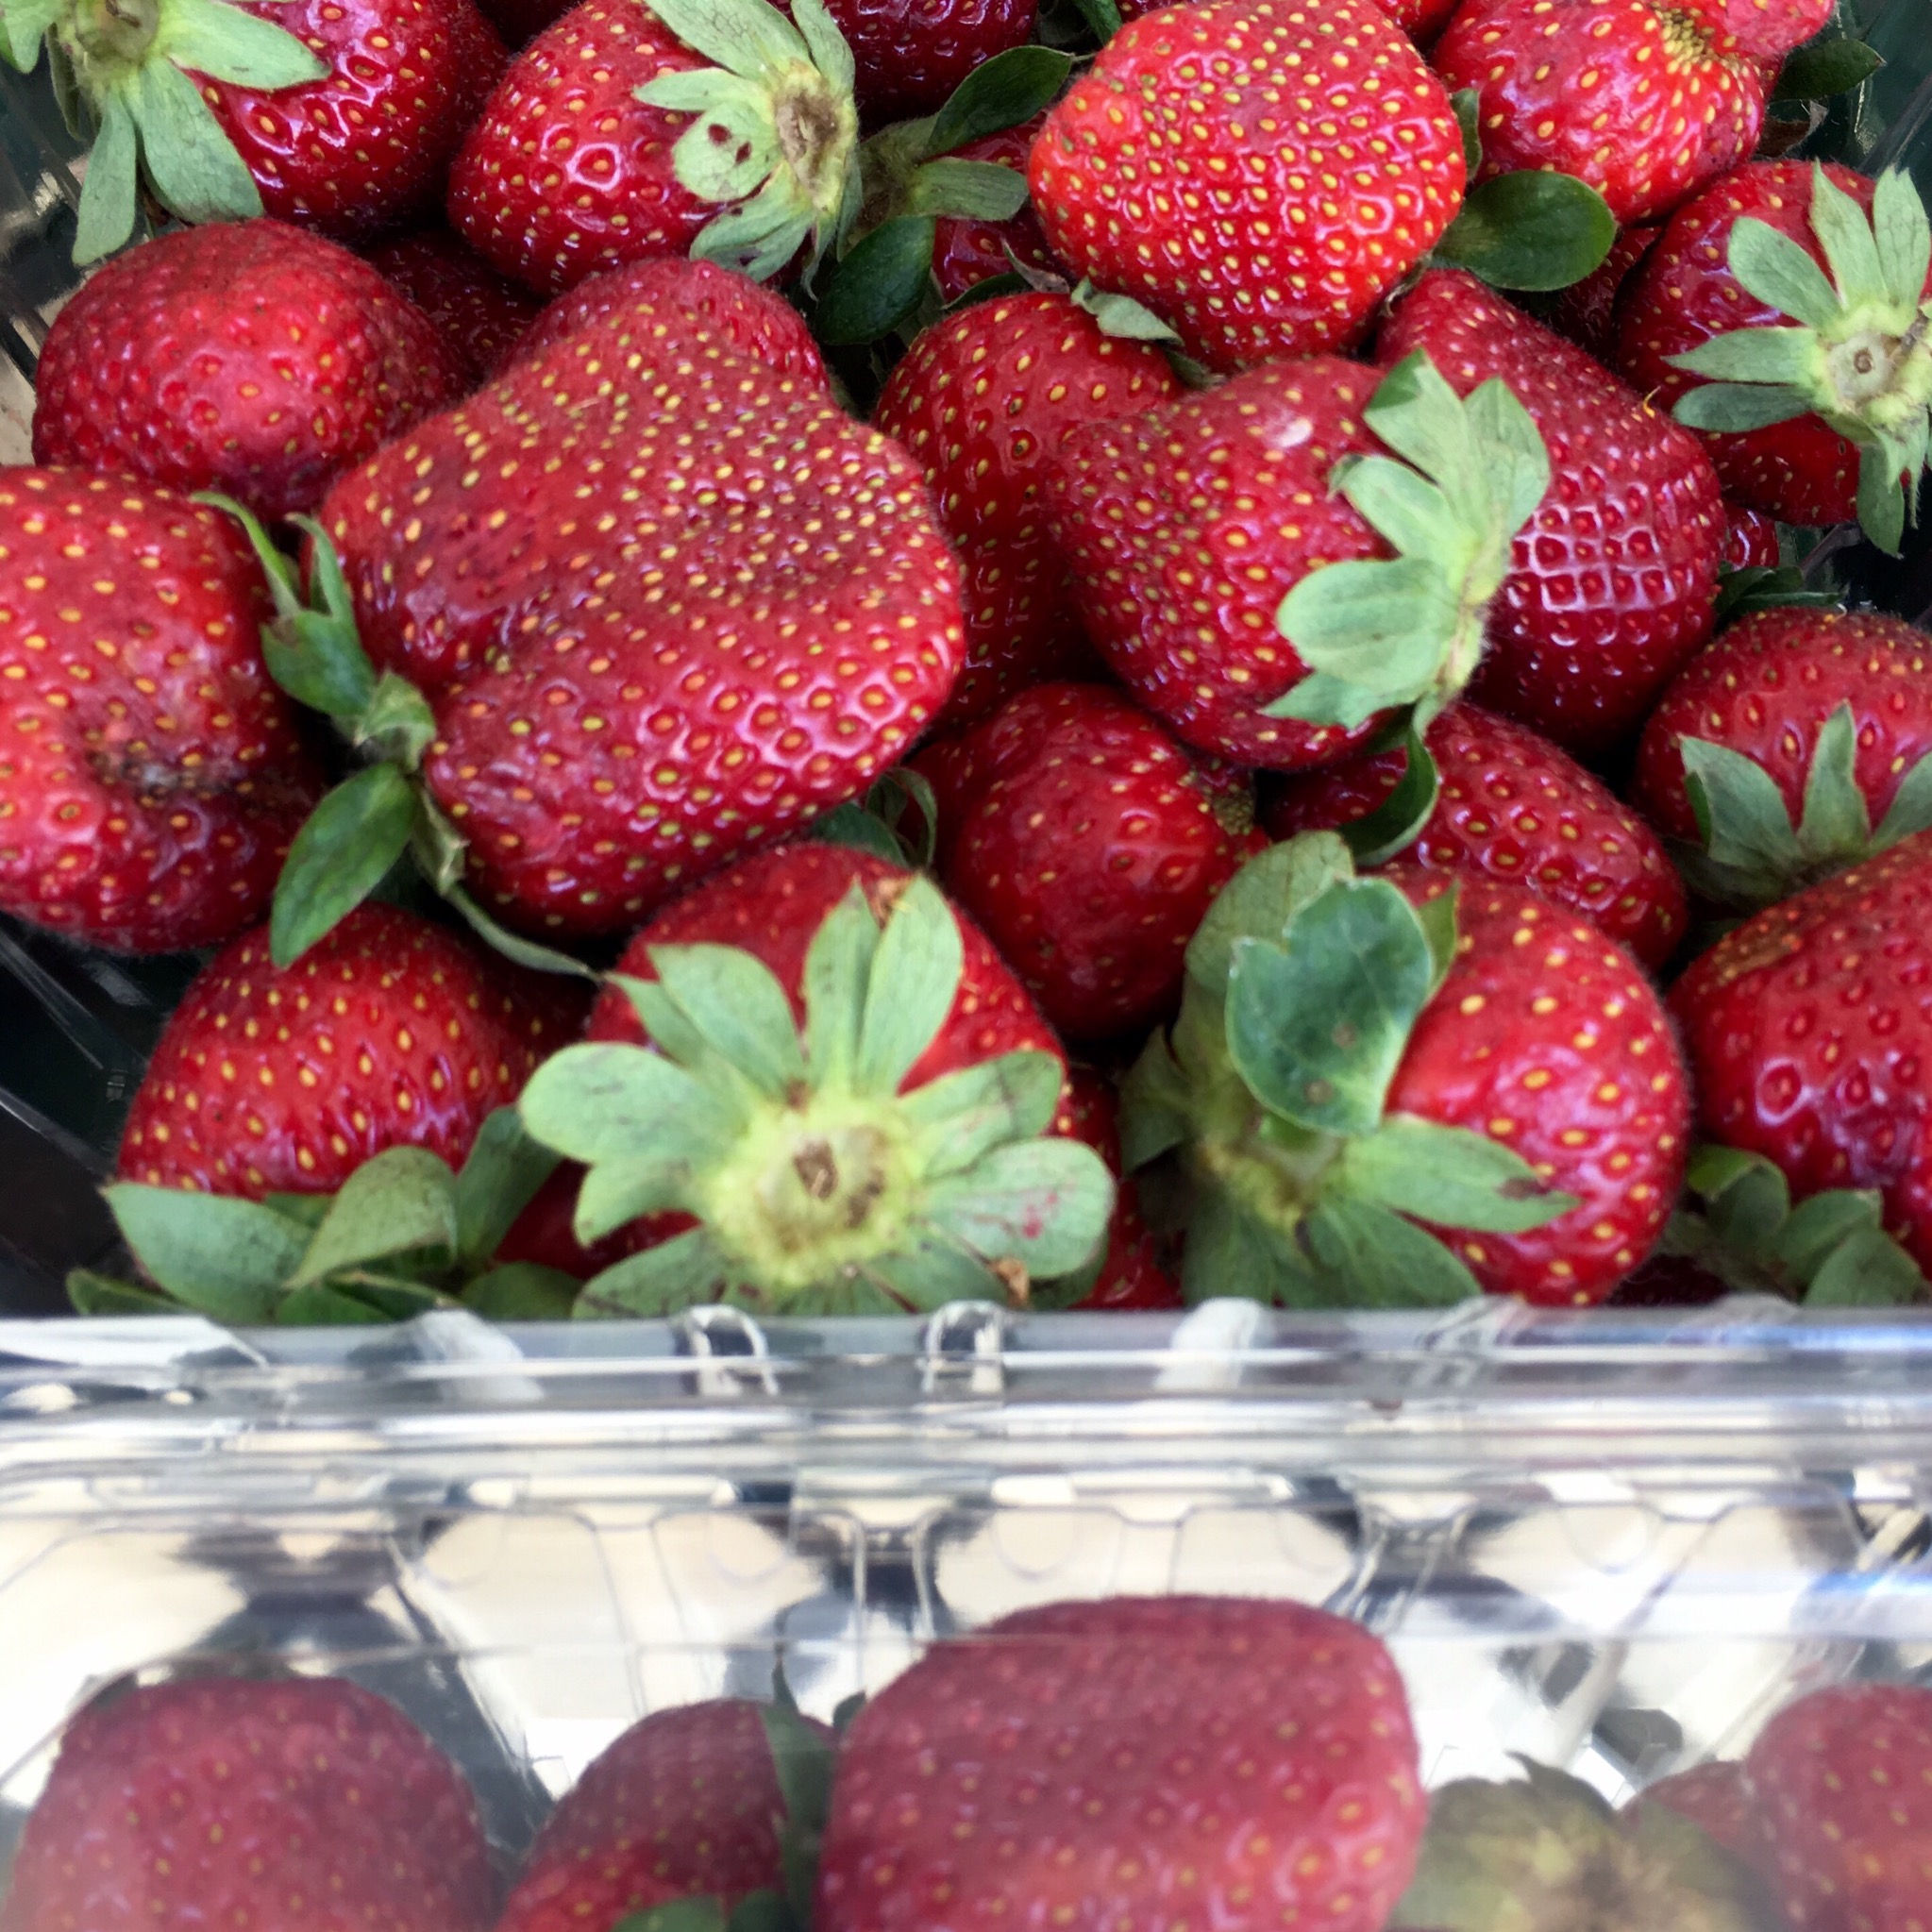 Blount County Alabama strawberries